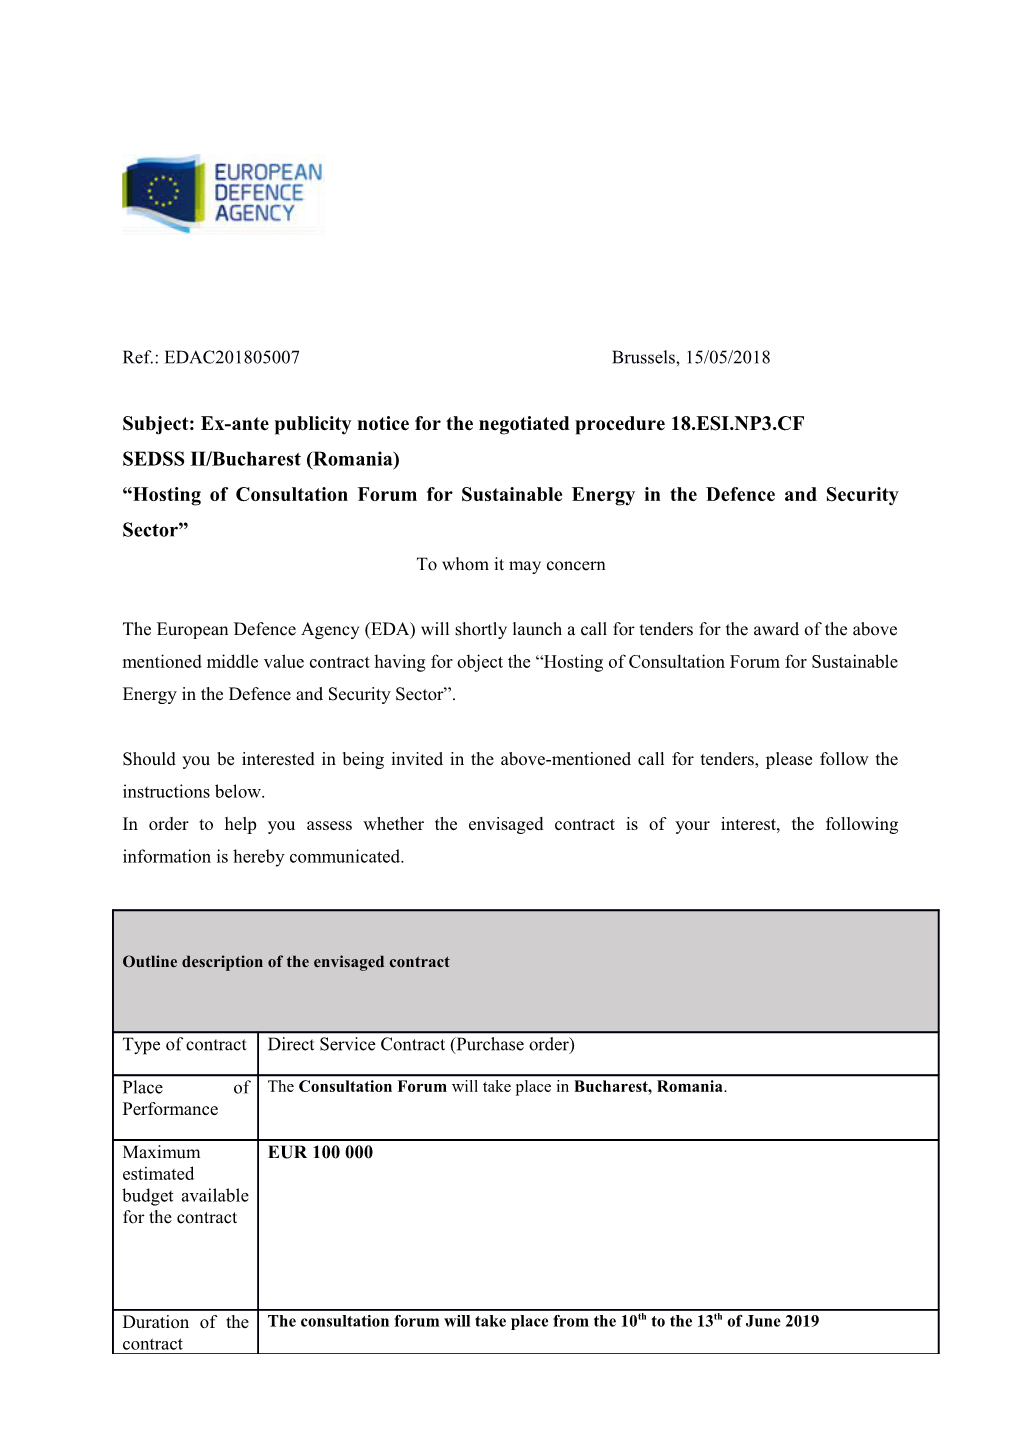 Subject:Ex-Ante Publicity Notice for the Negotiated Procedure 18.ESI.NP3.CF